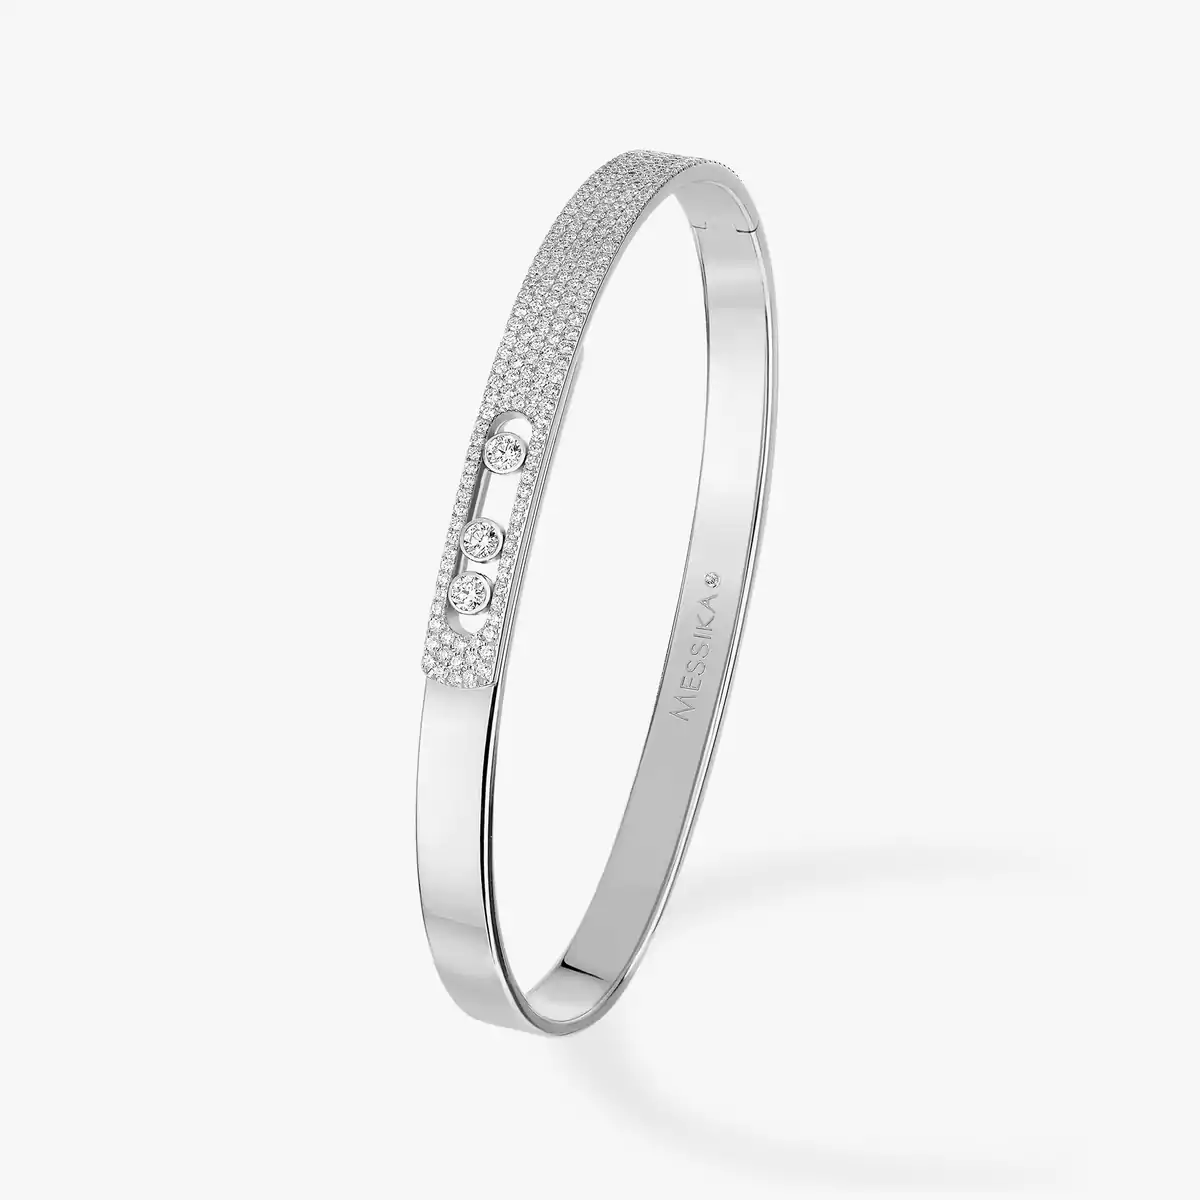 Bracelet For Her White Gold Diamond Move Noa Bangle SM Pavé 10093-WG